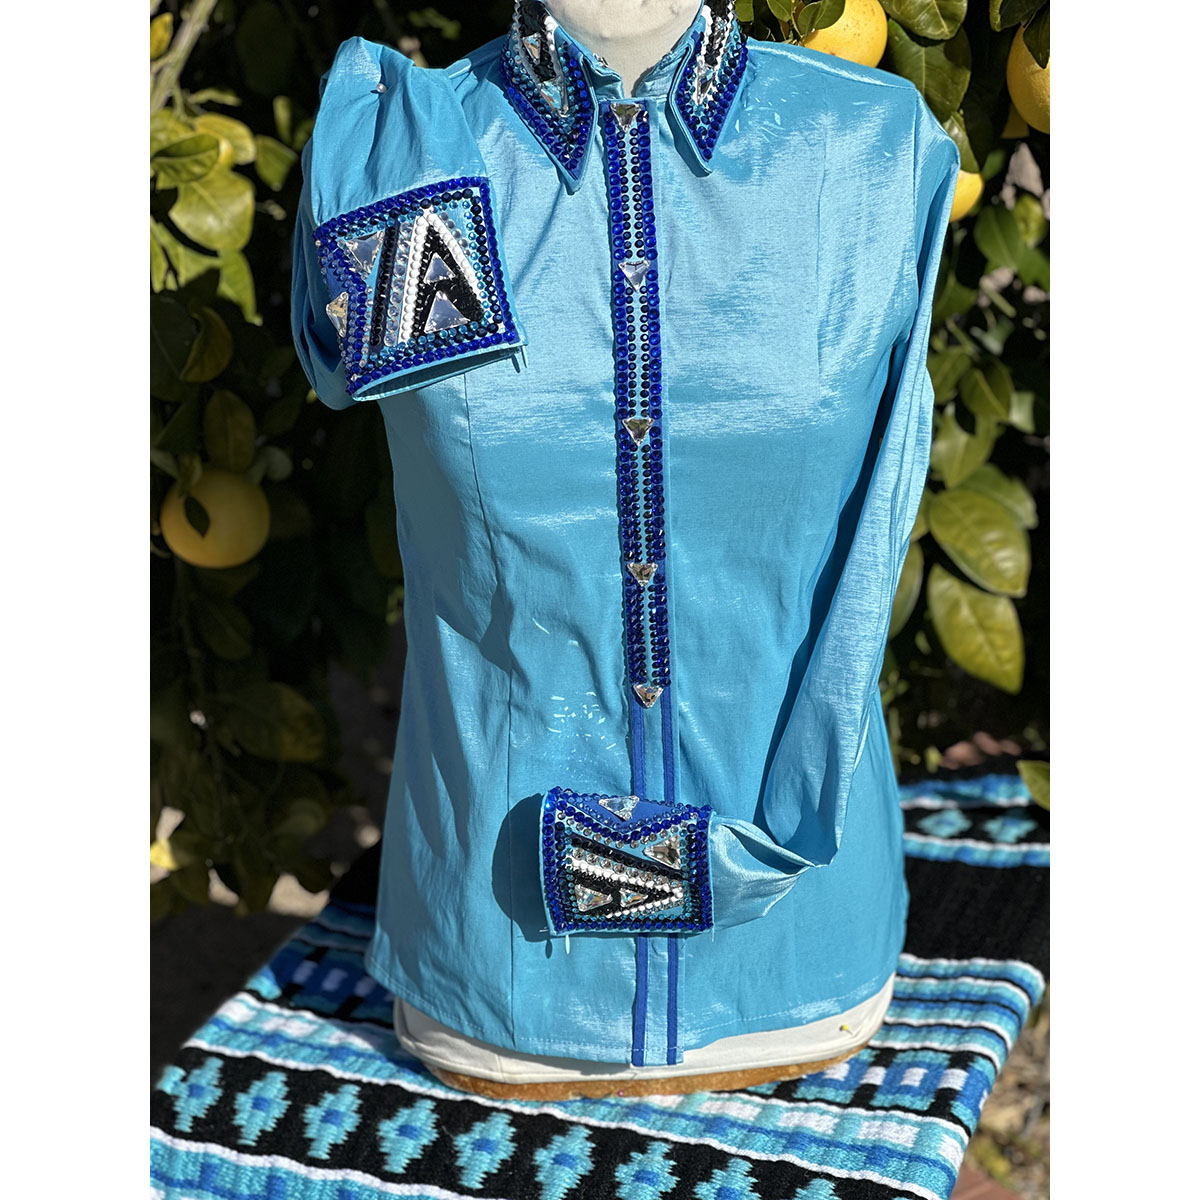 Sky Blue Western Show Shirt on a matching saddle blanket